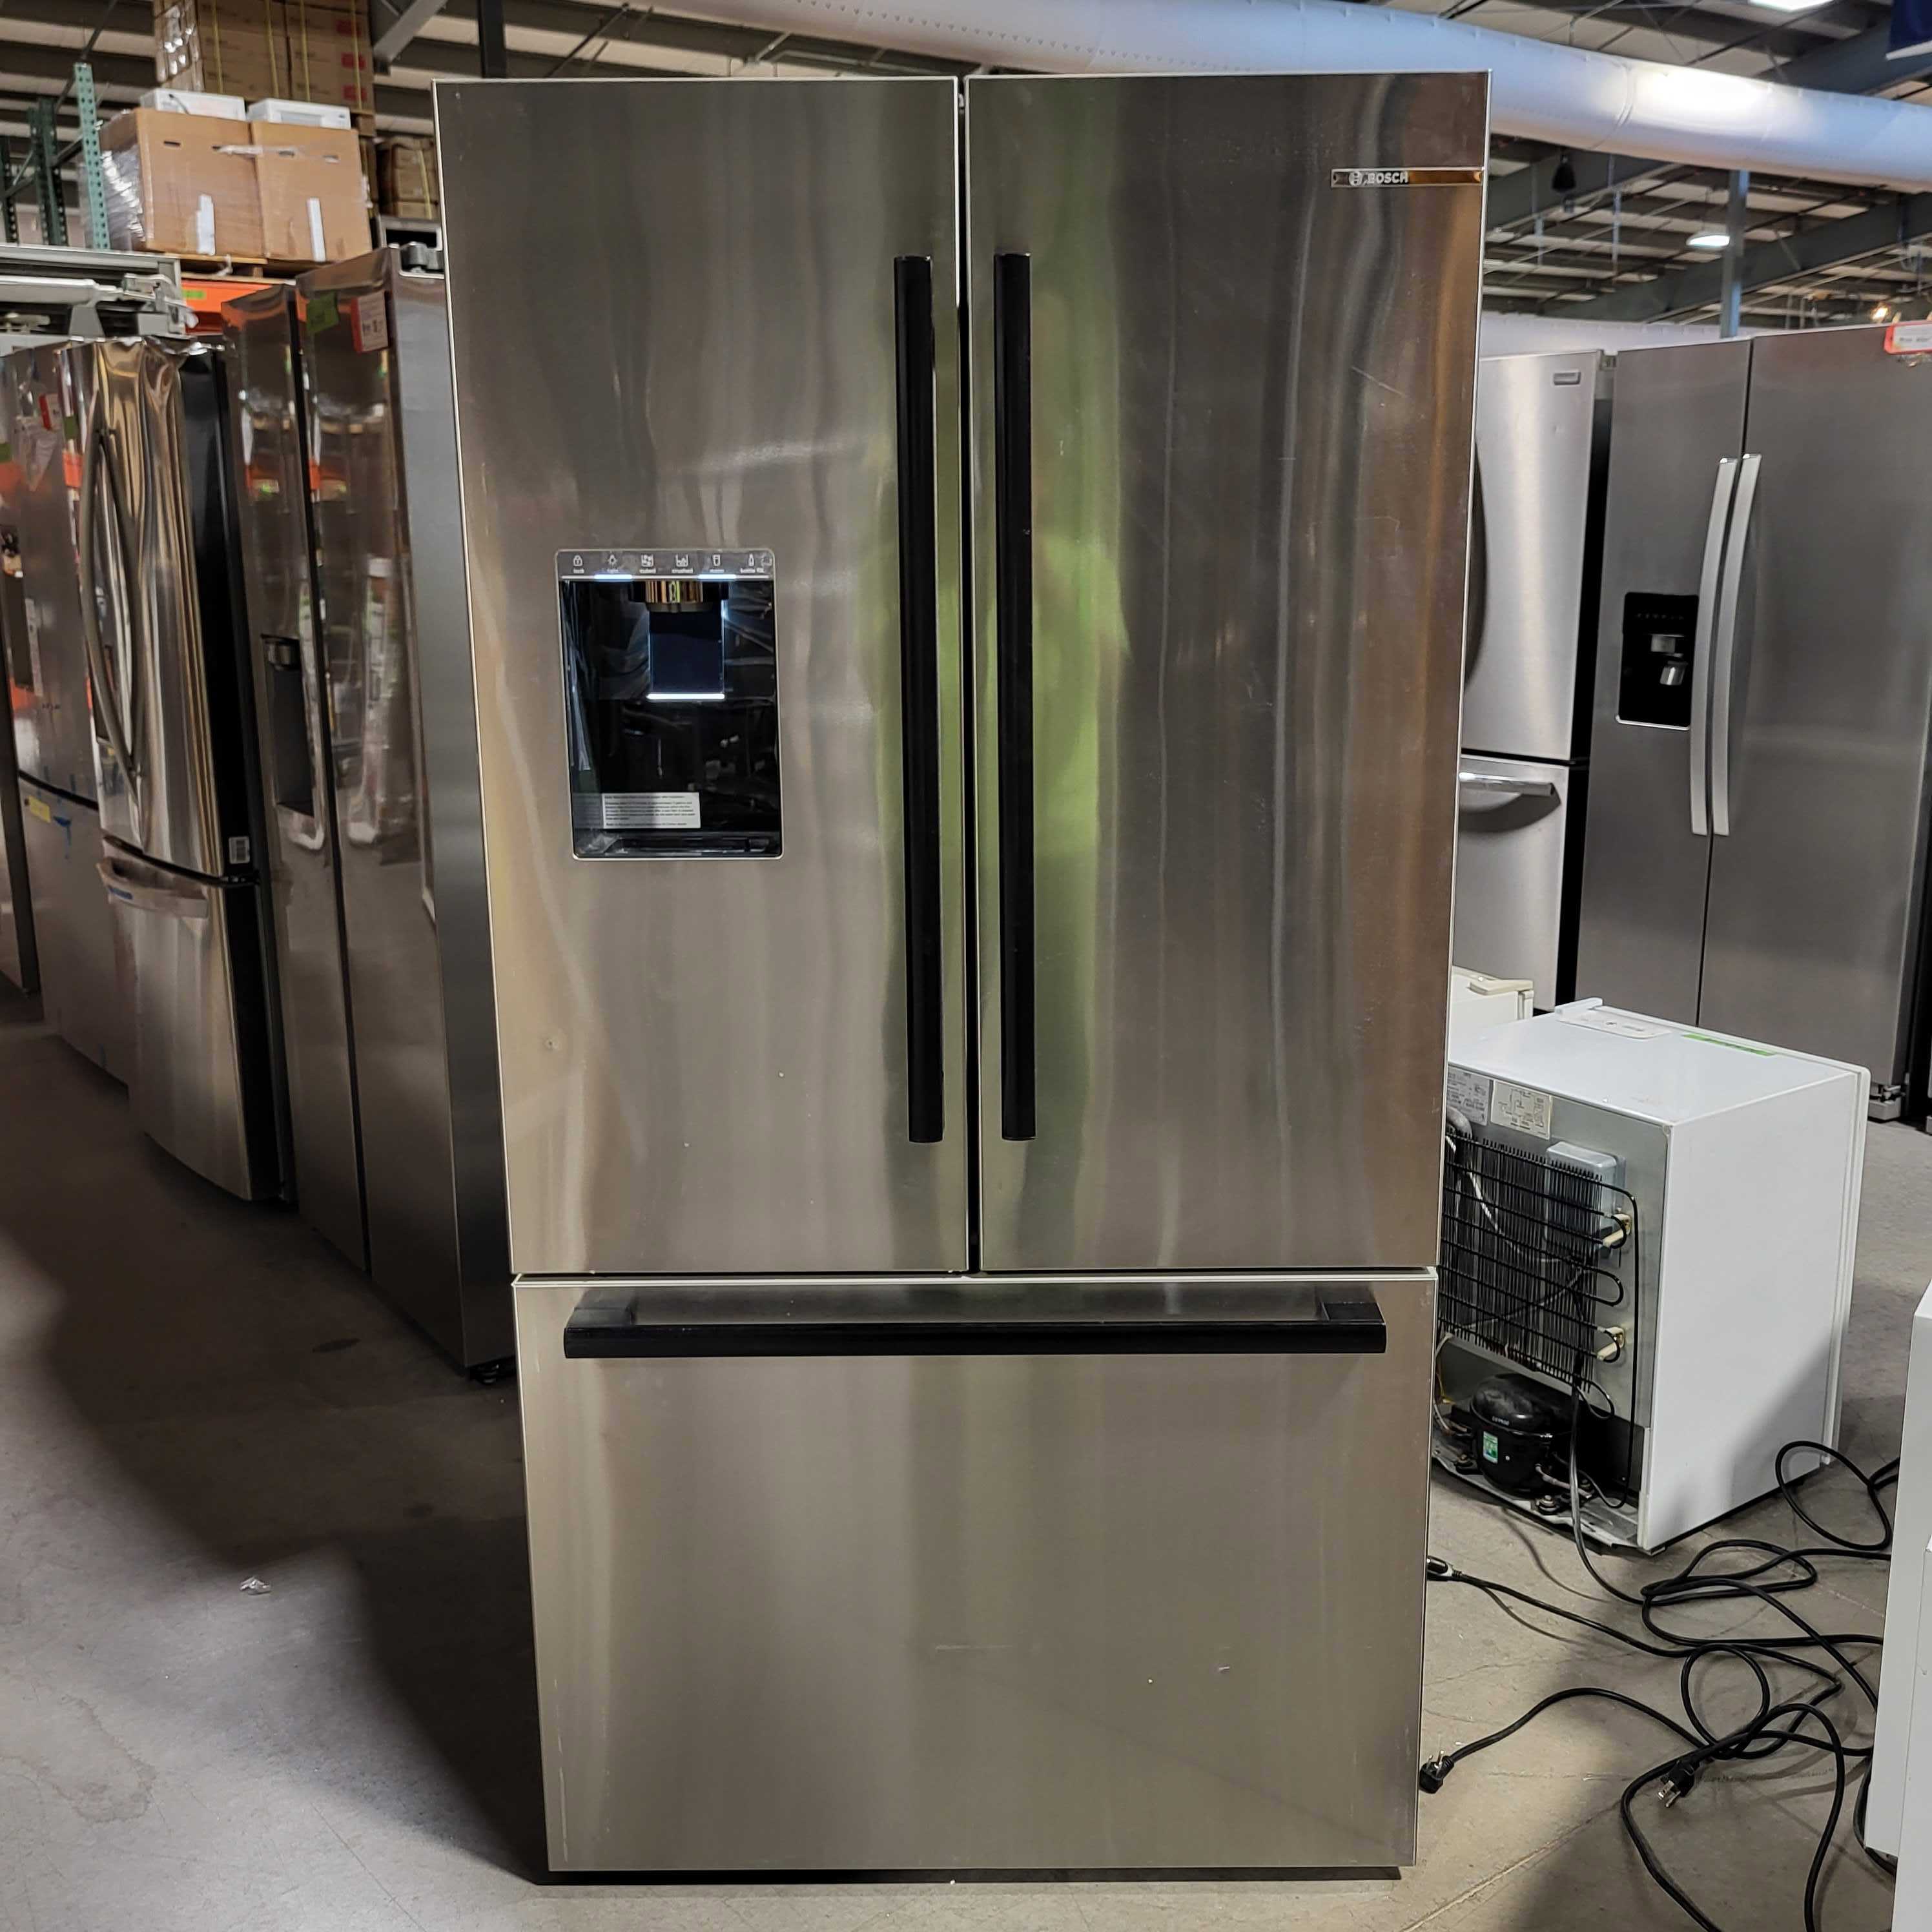 F4923 Bosch Stainless Steel French Doors Bottom Freezer Refrigerator